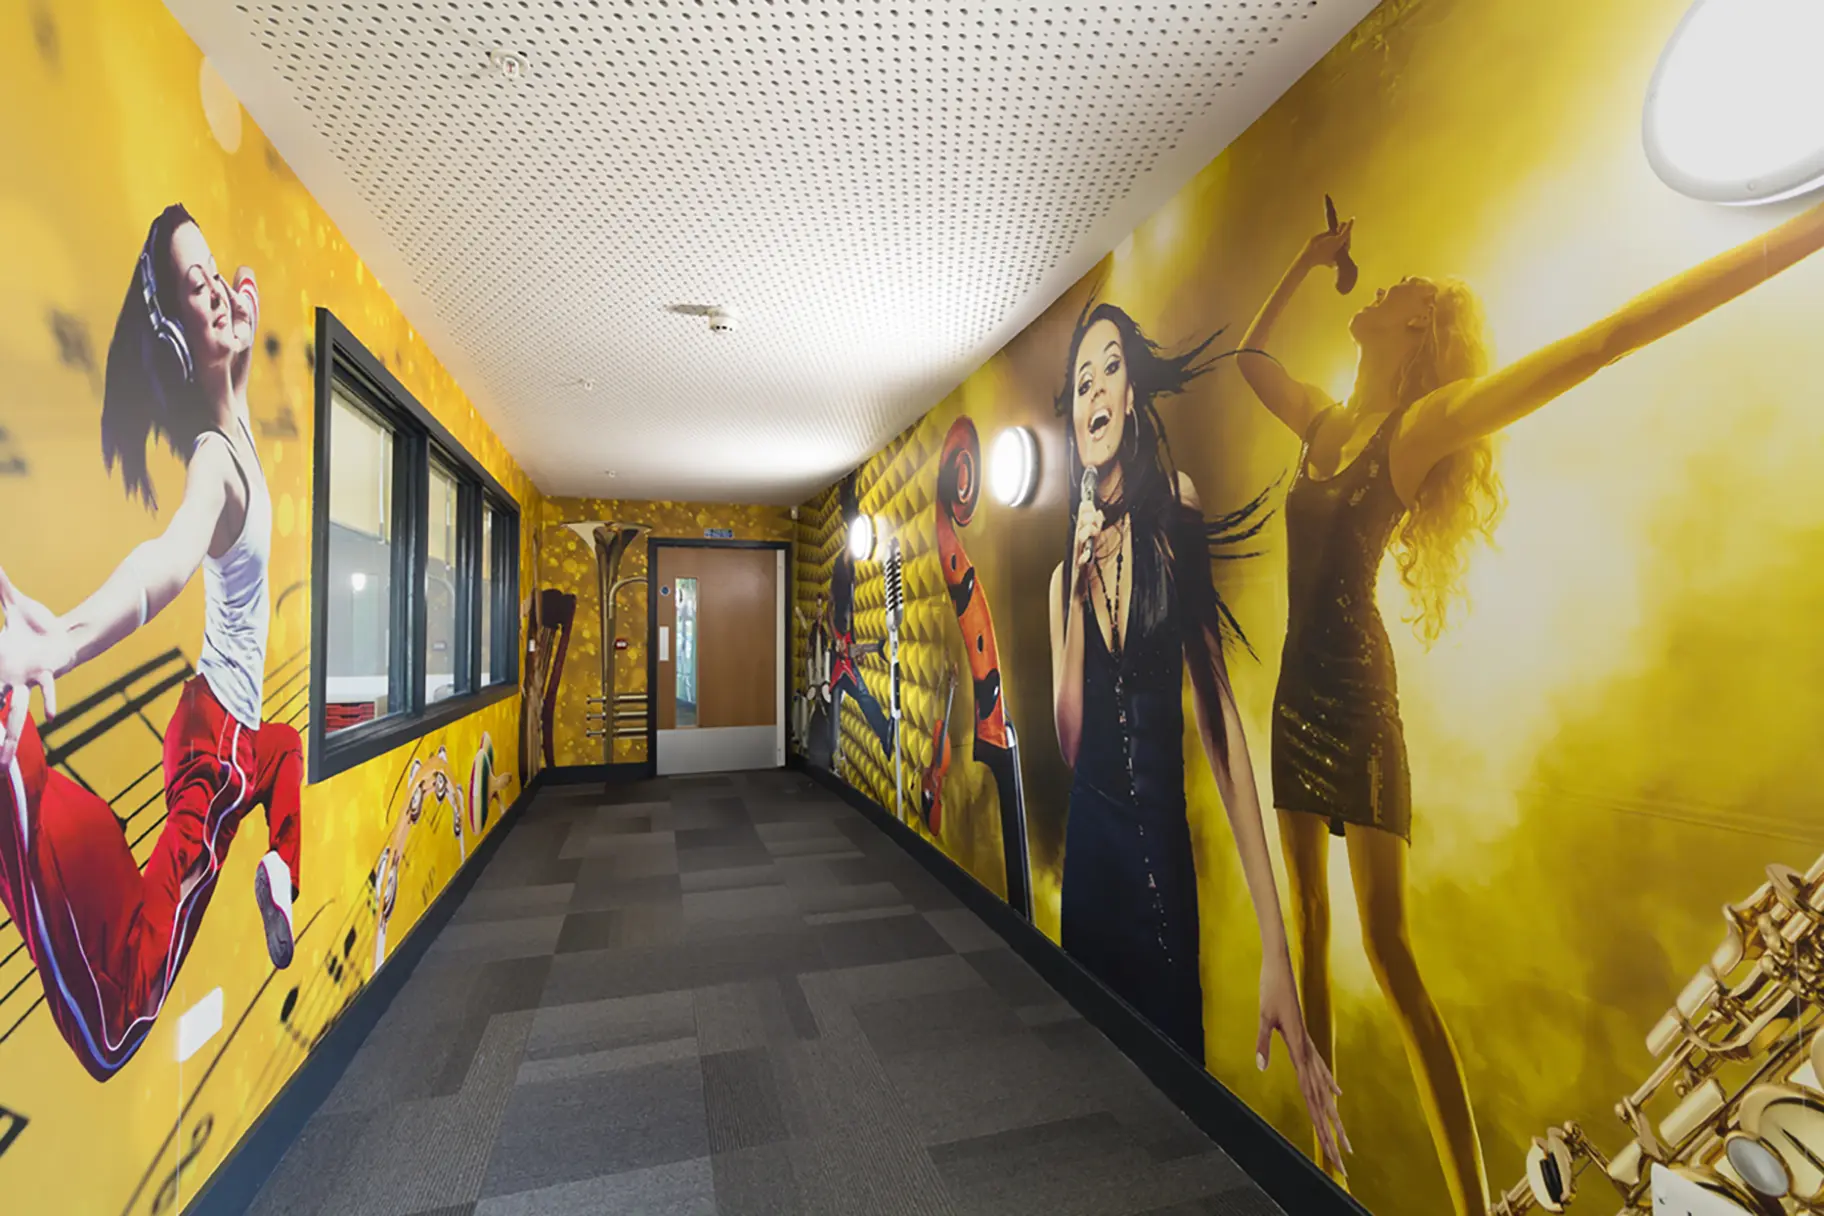 Roebuck Primary History and Drama themed corridor wall art